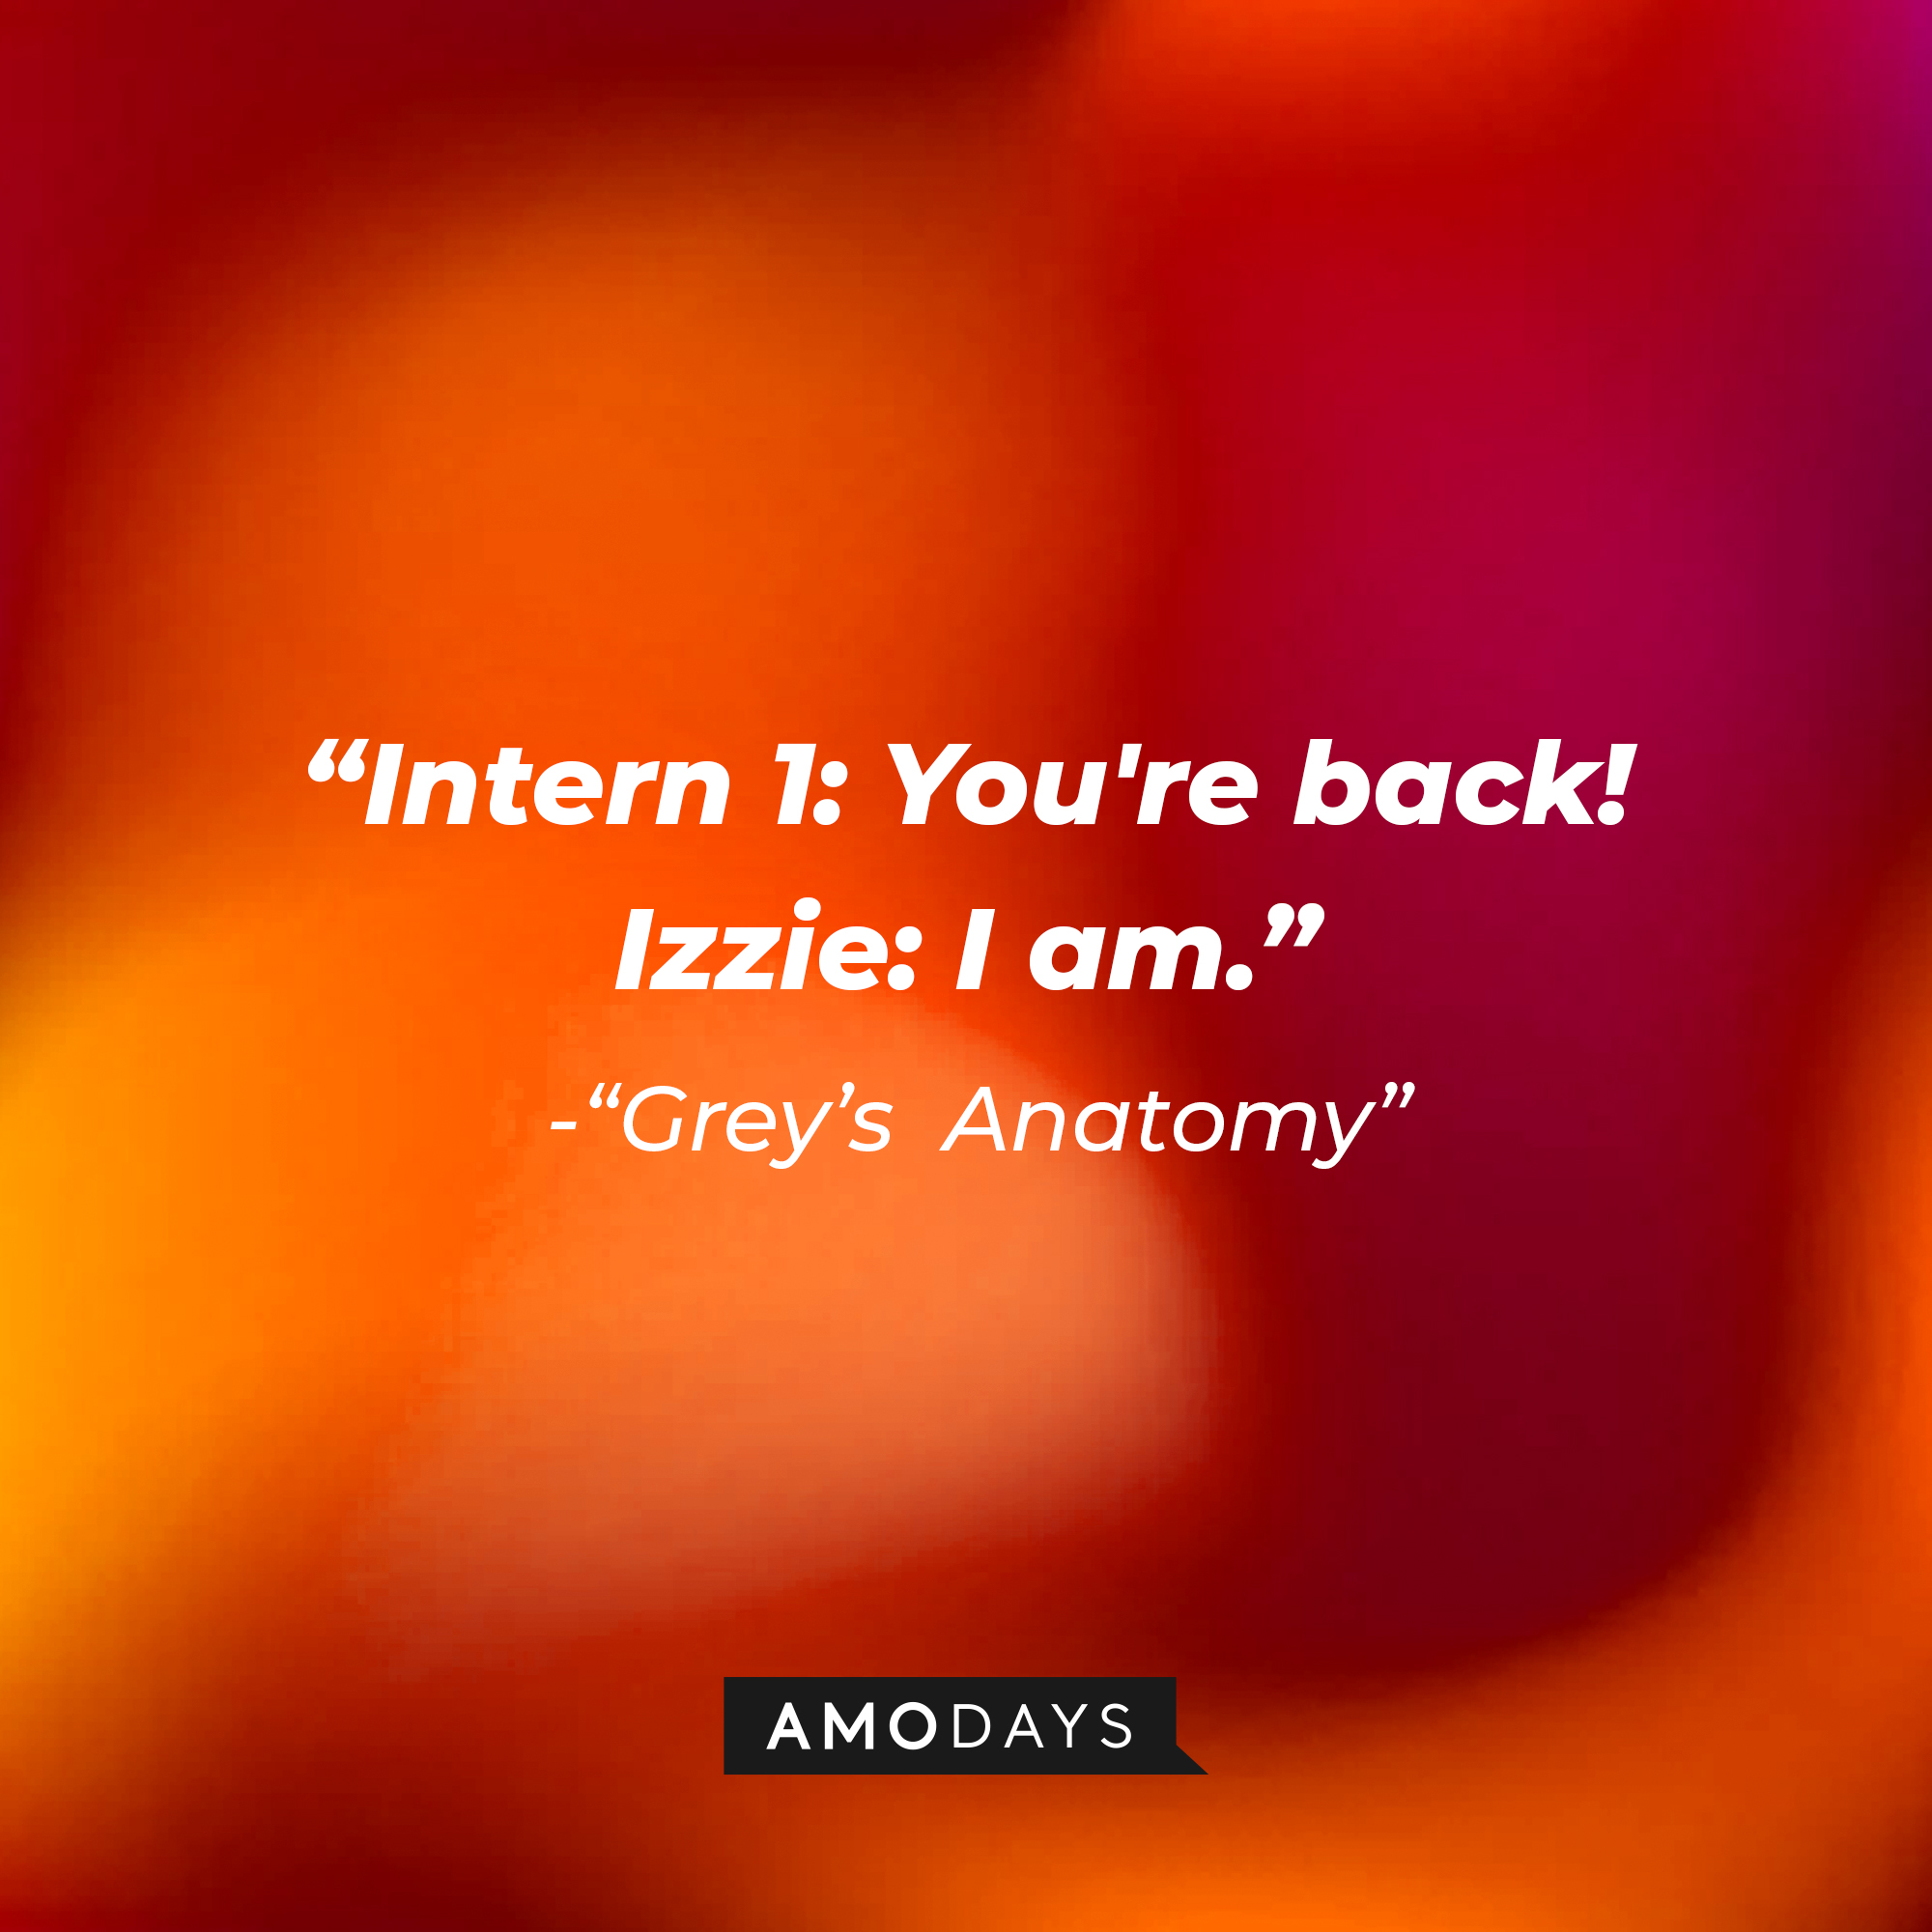 Intern 1's quote: "You're back!" Izzie: "I am." | Image: Amodays